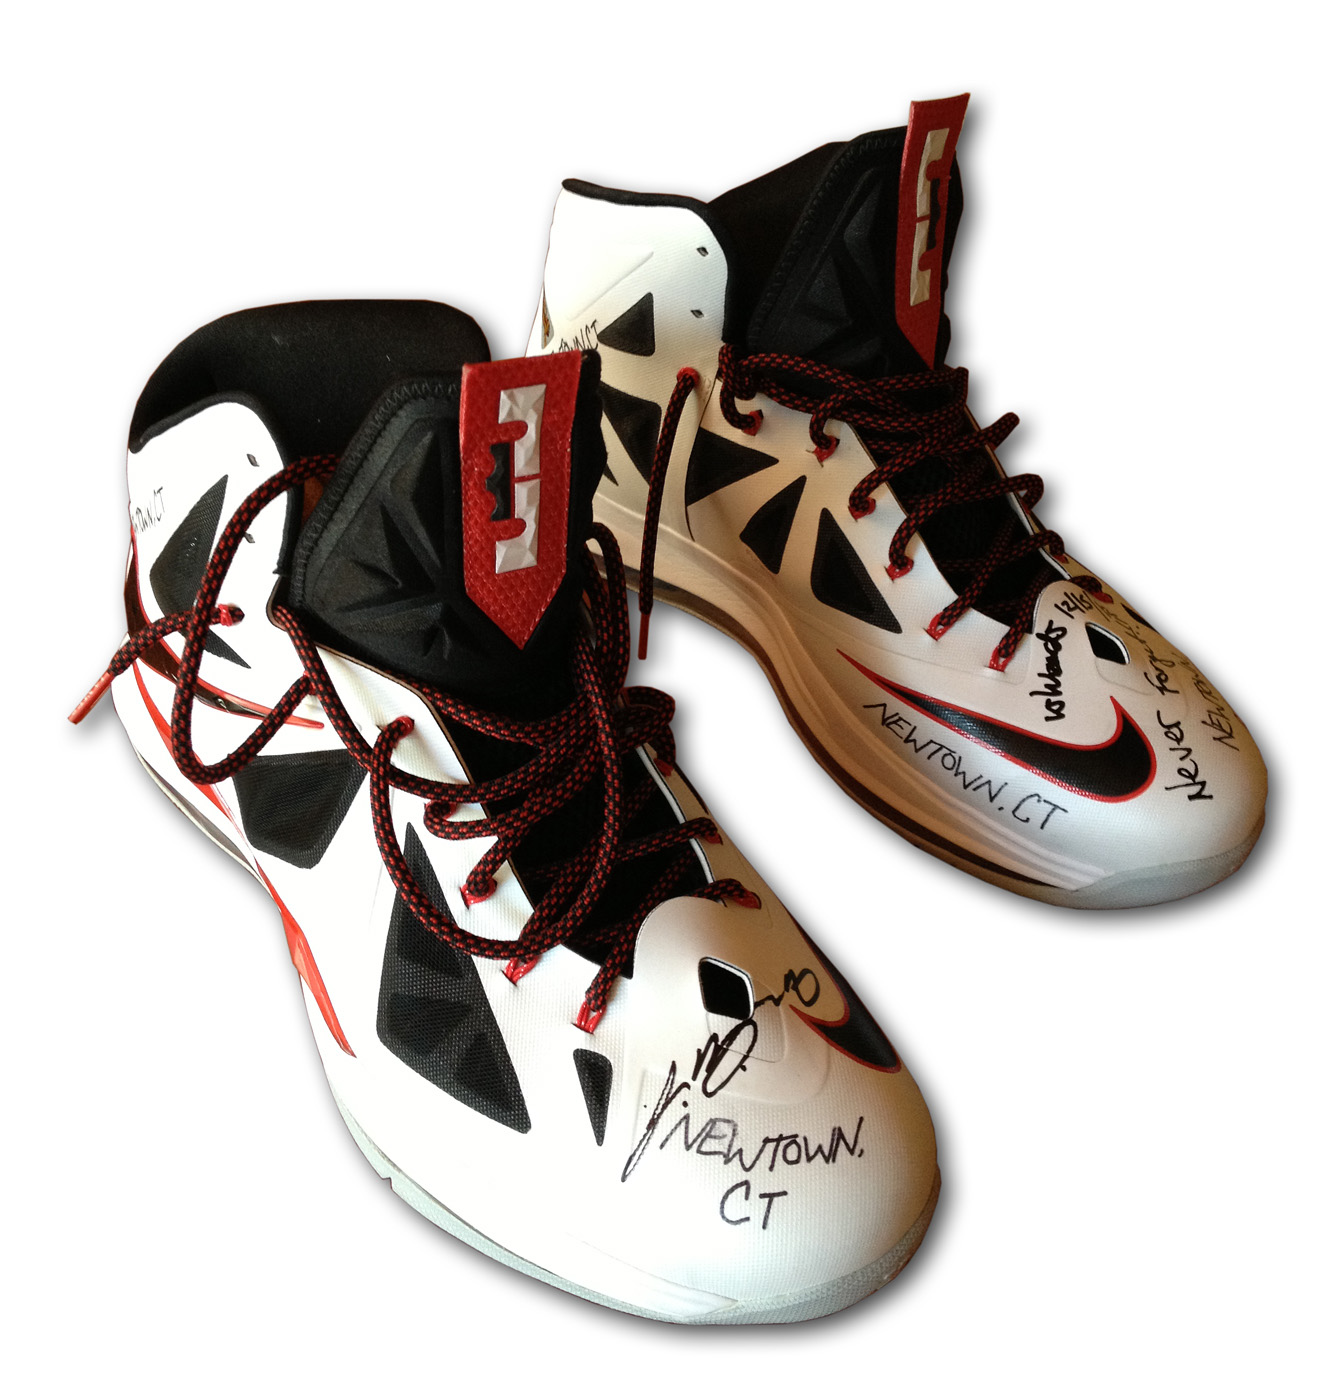 lebron james signed shoes